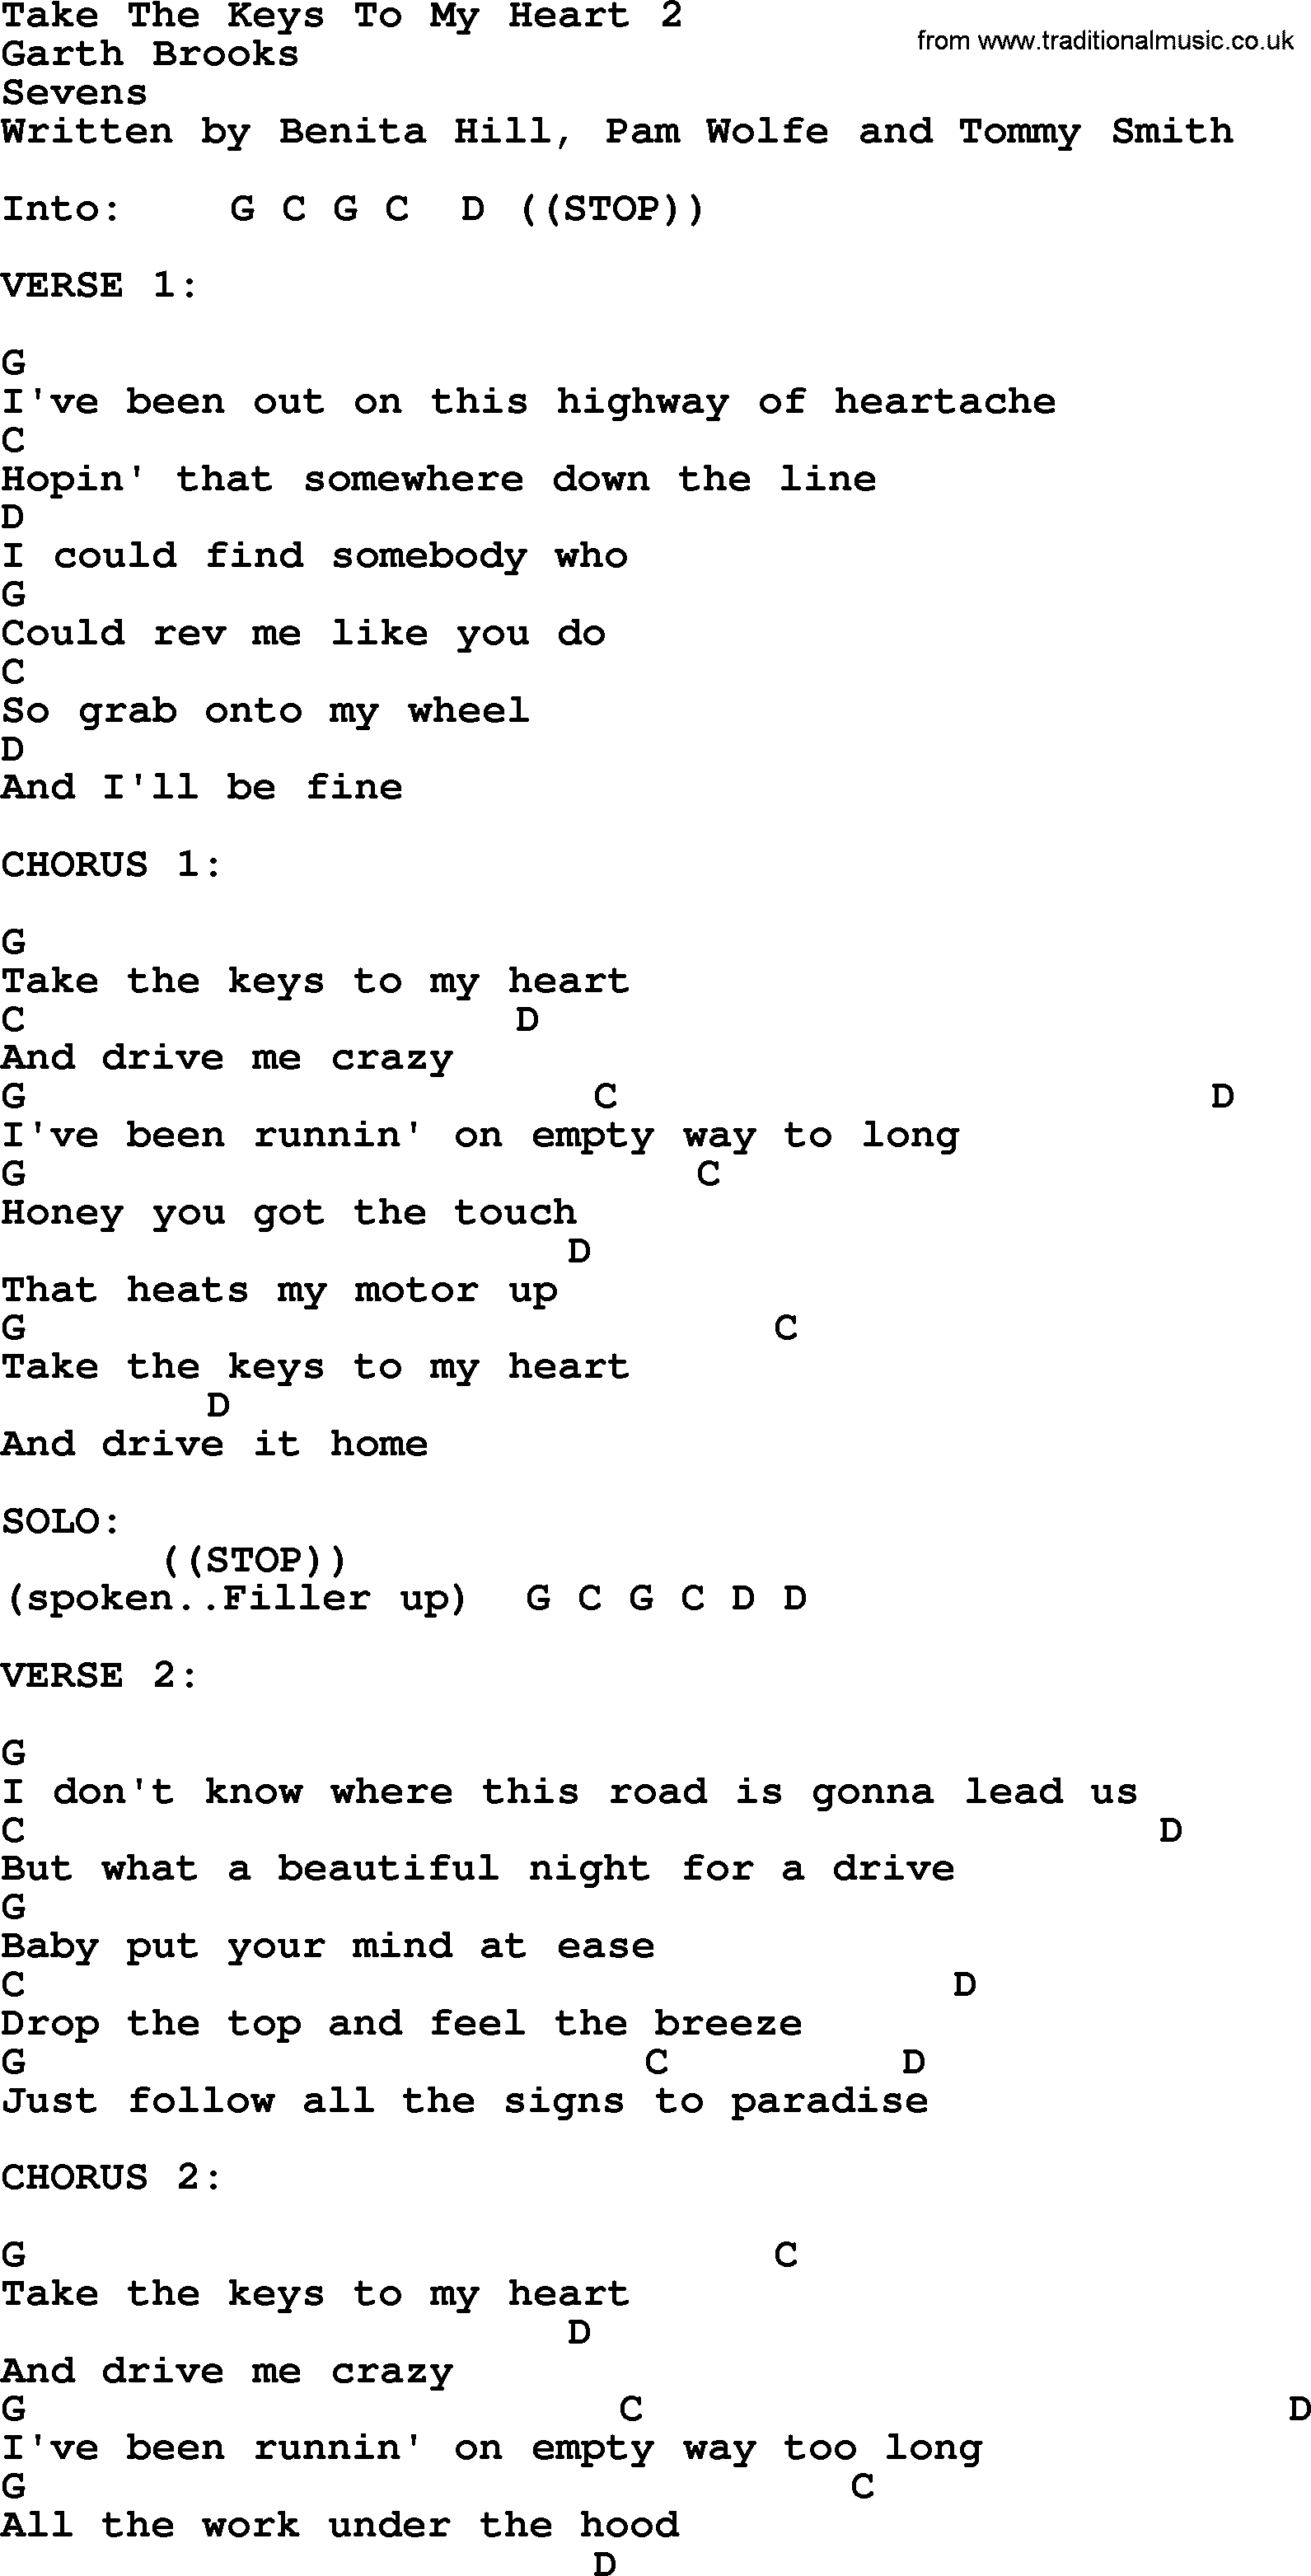 Garth Brooks song: Take The Keys To My Heart 2, lyrics and chords